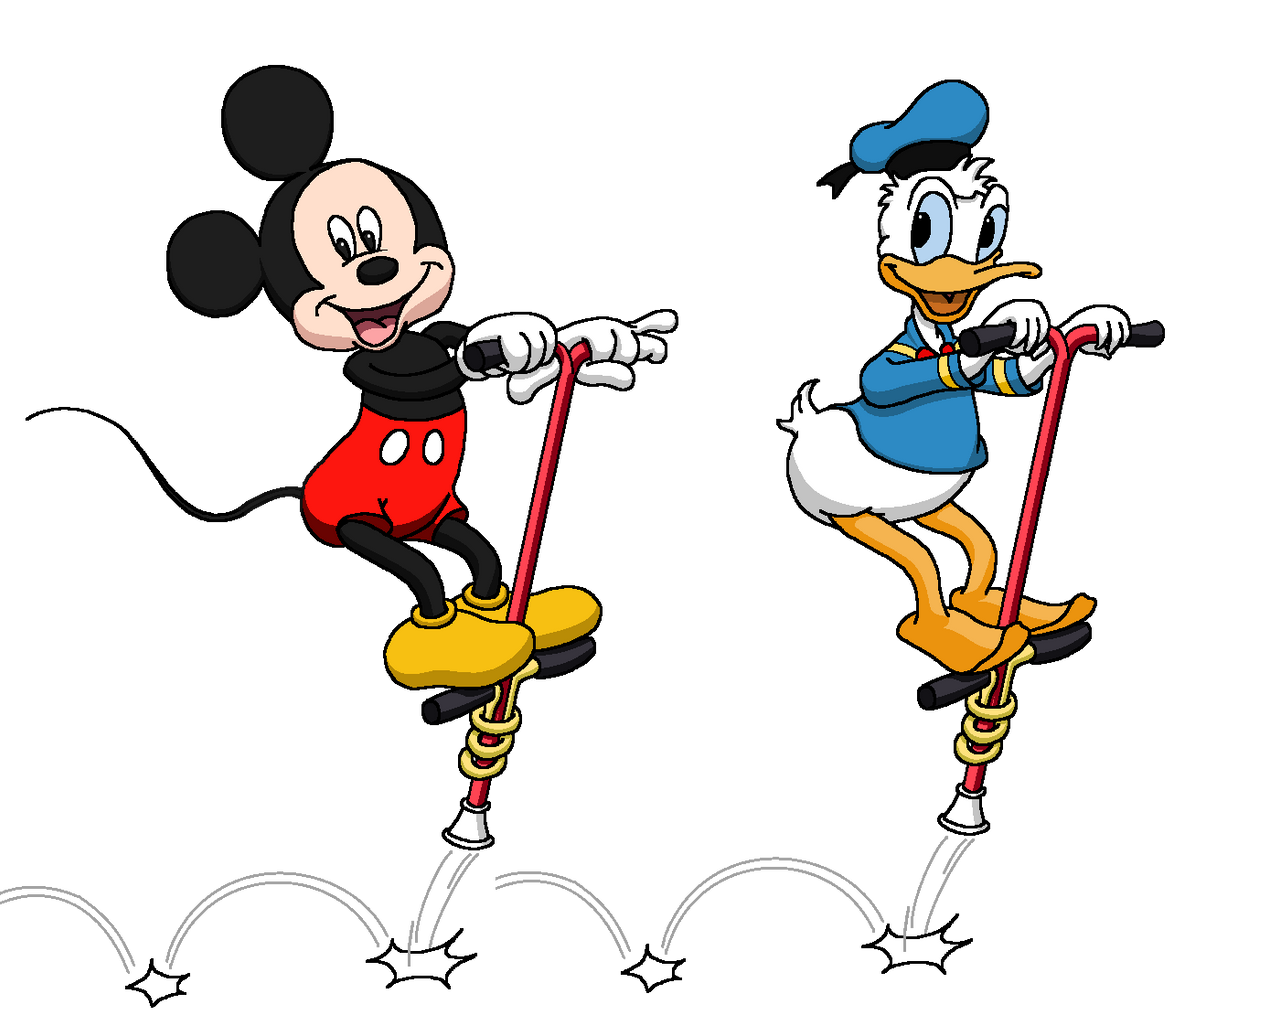 Mickey and Donald on Pogo Sticks by undiscoveredgenius on DeviantArt